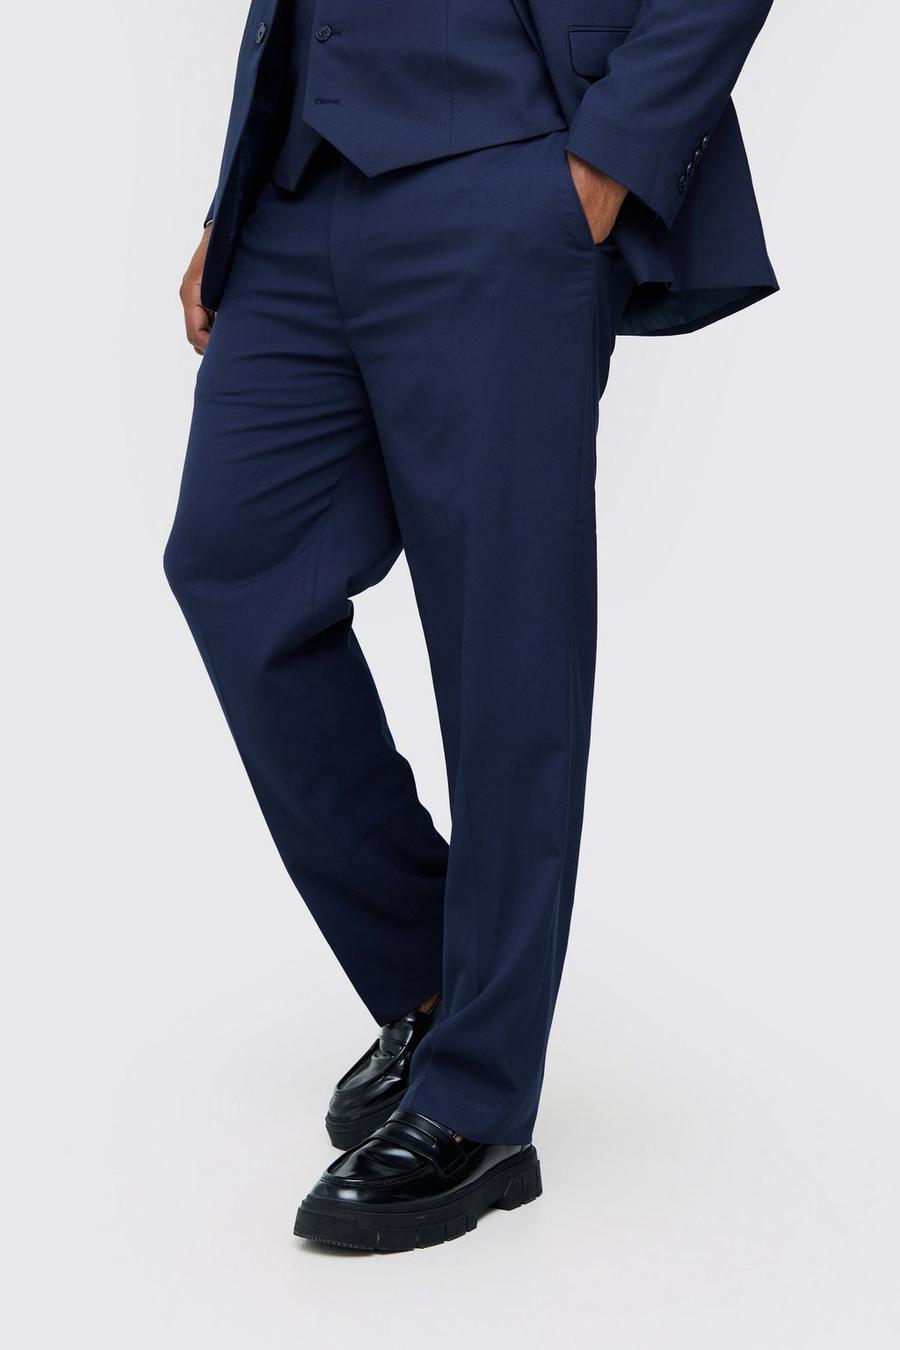 Pantalón Plus básico de traje Regular azul marino, Navy image number 1